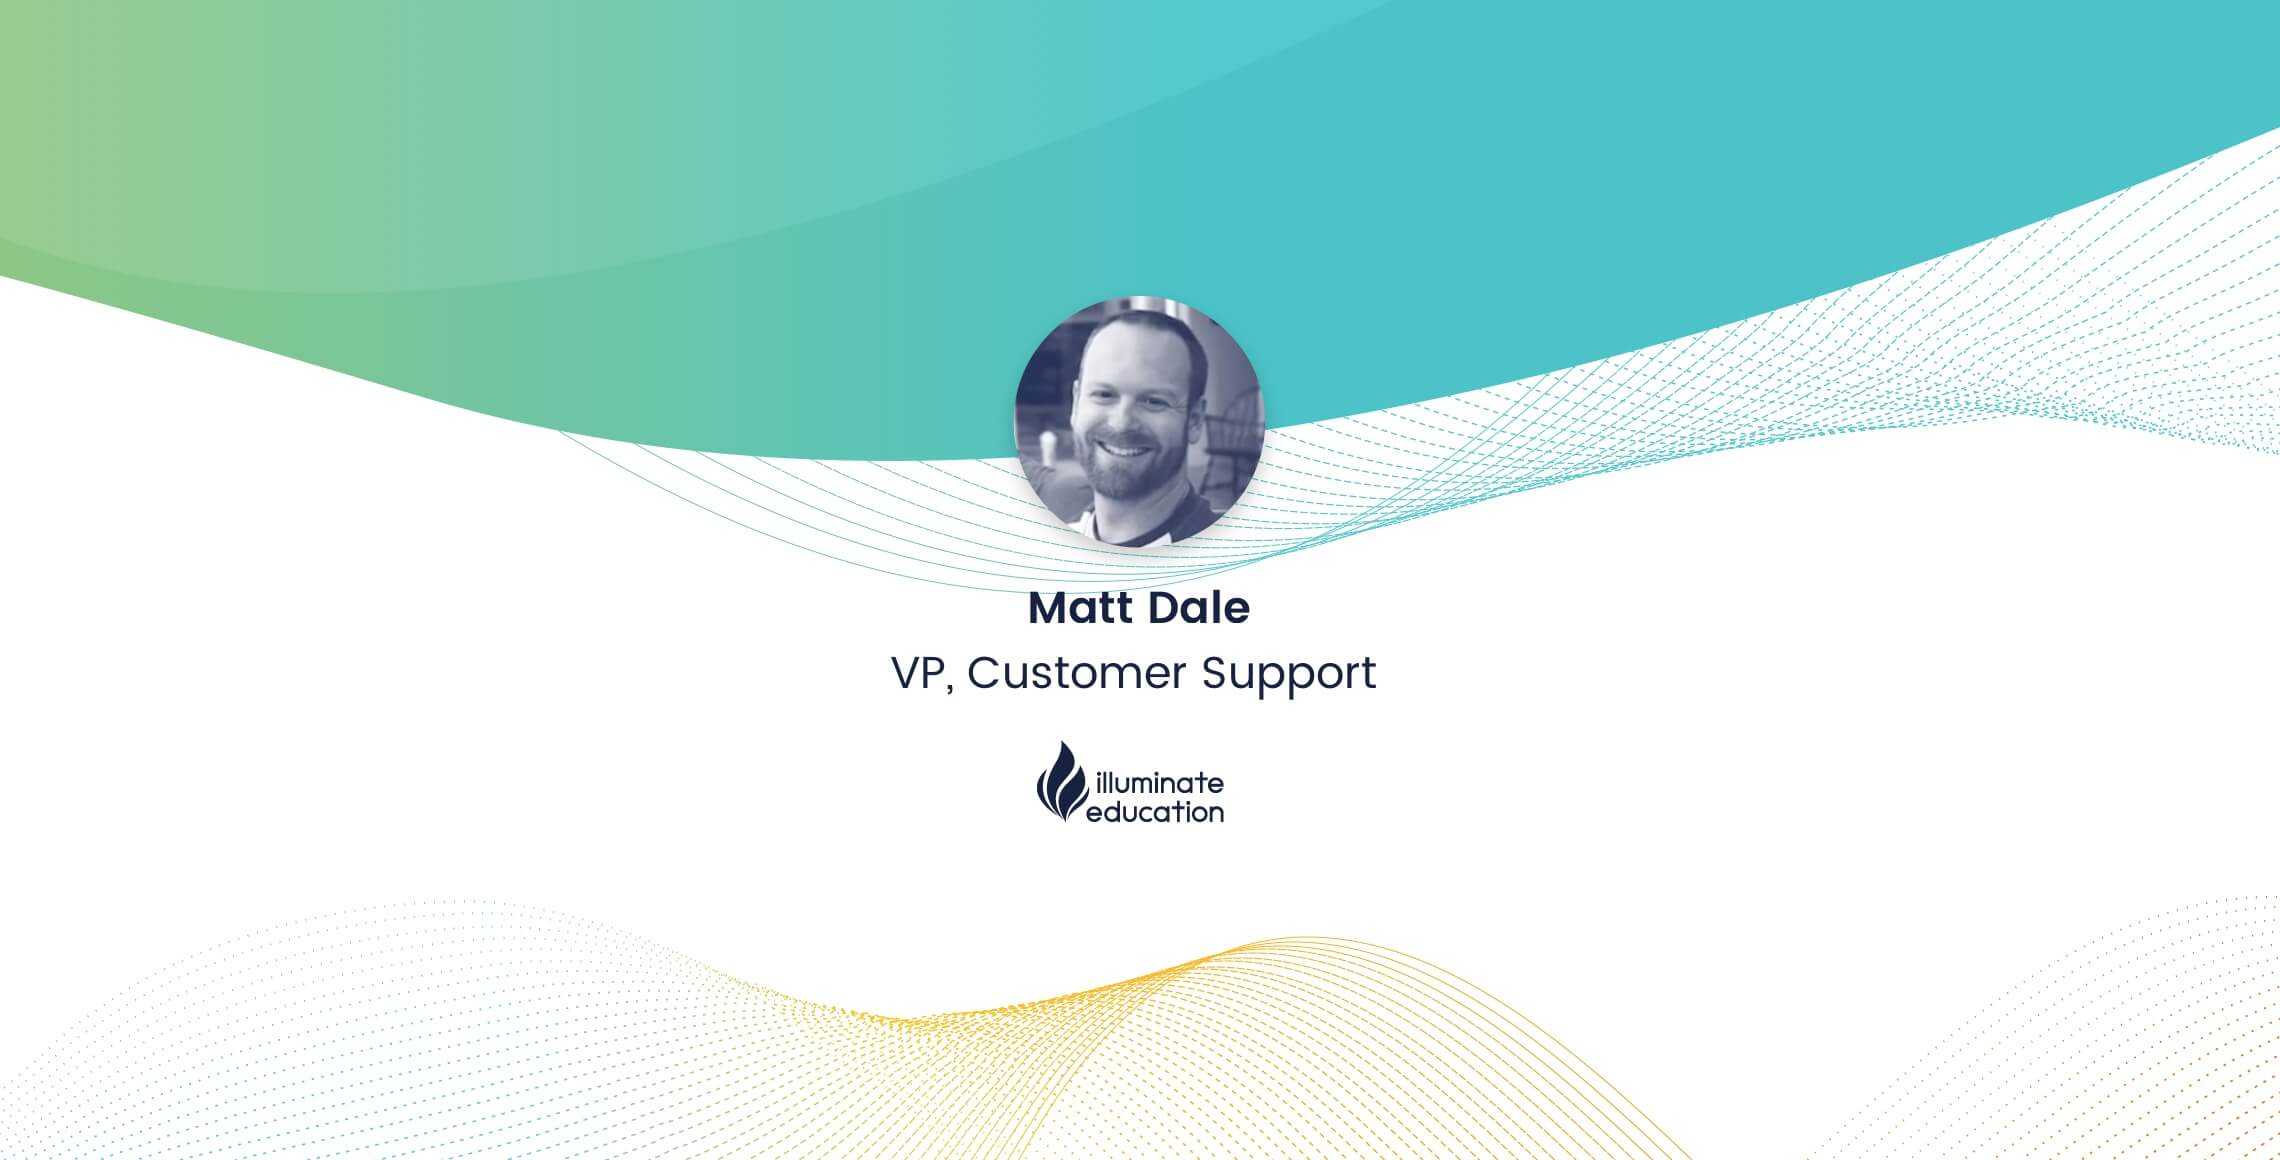 Matt Dale, Vice President of Customer Support, Illuminate Education